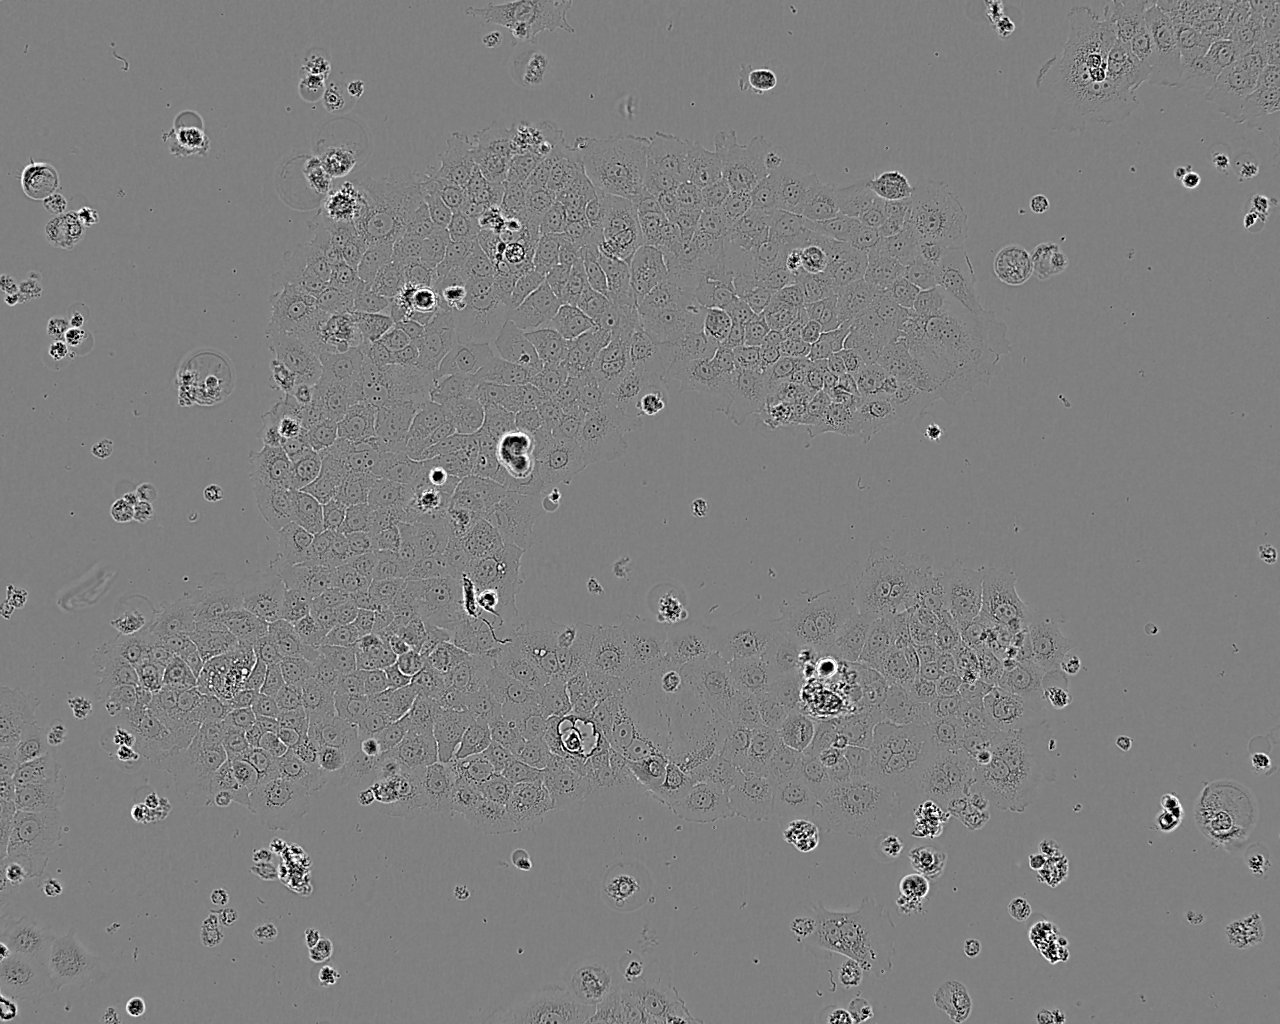 RMC-1 epithelioid cells大鼠视网膜Muller细胞系